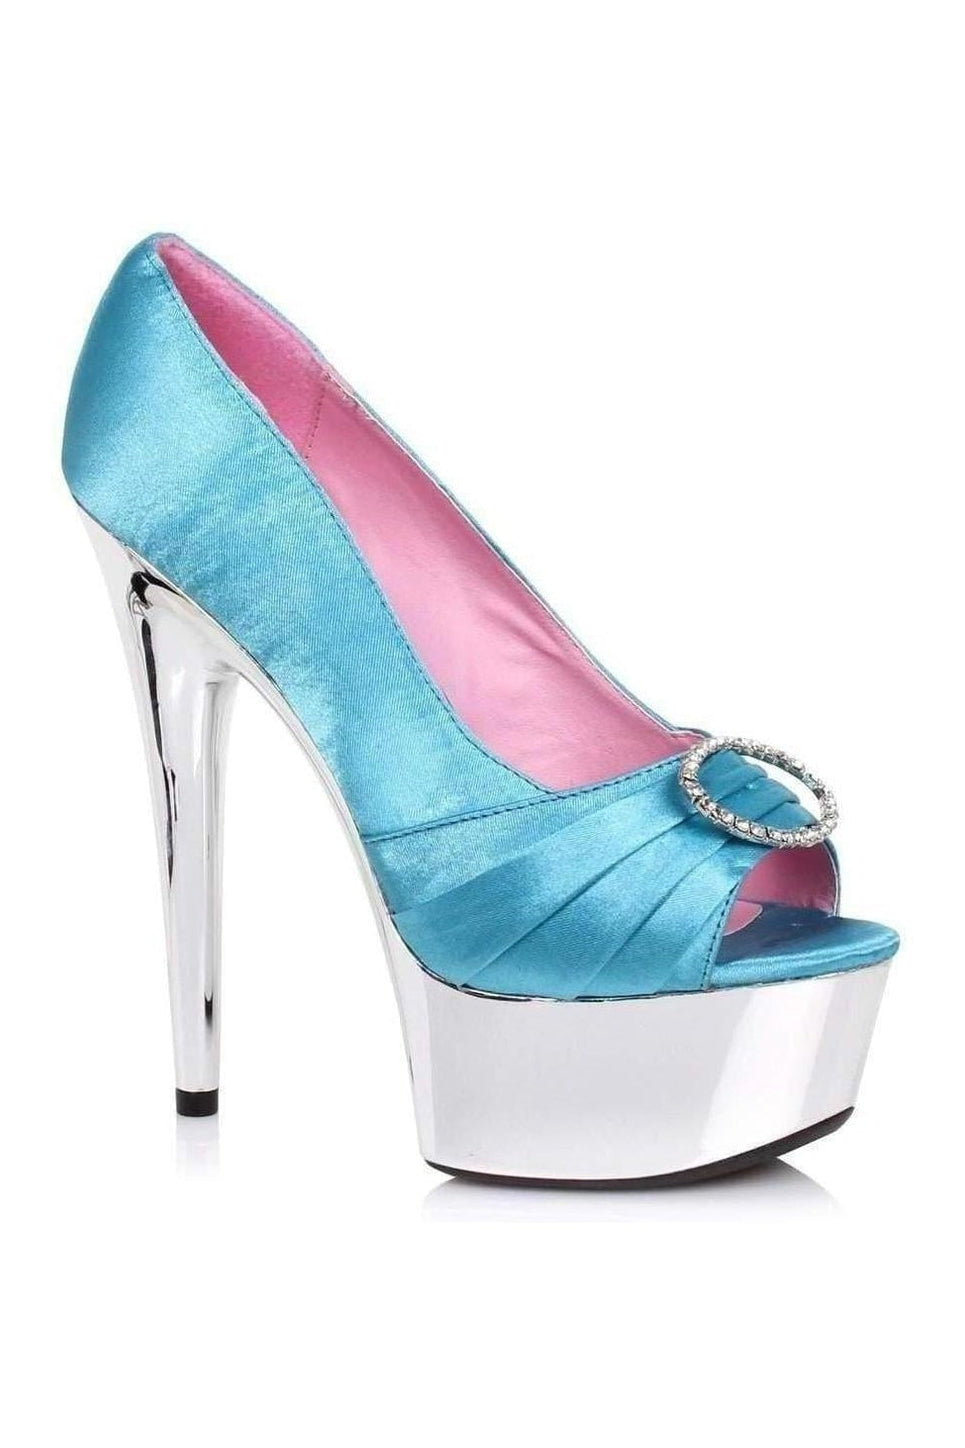 Ellie Shoes Teal Pumps Platform Stripper Shoes | Buy at Sexyshoes.com